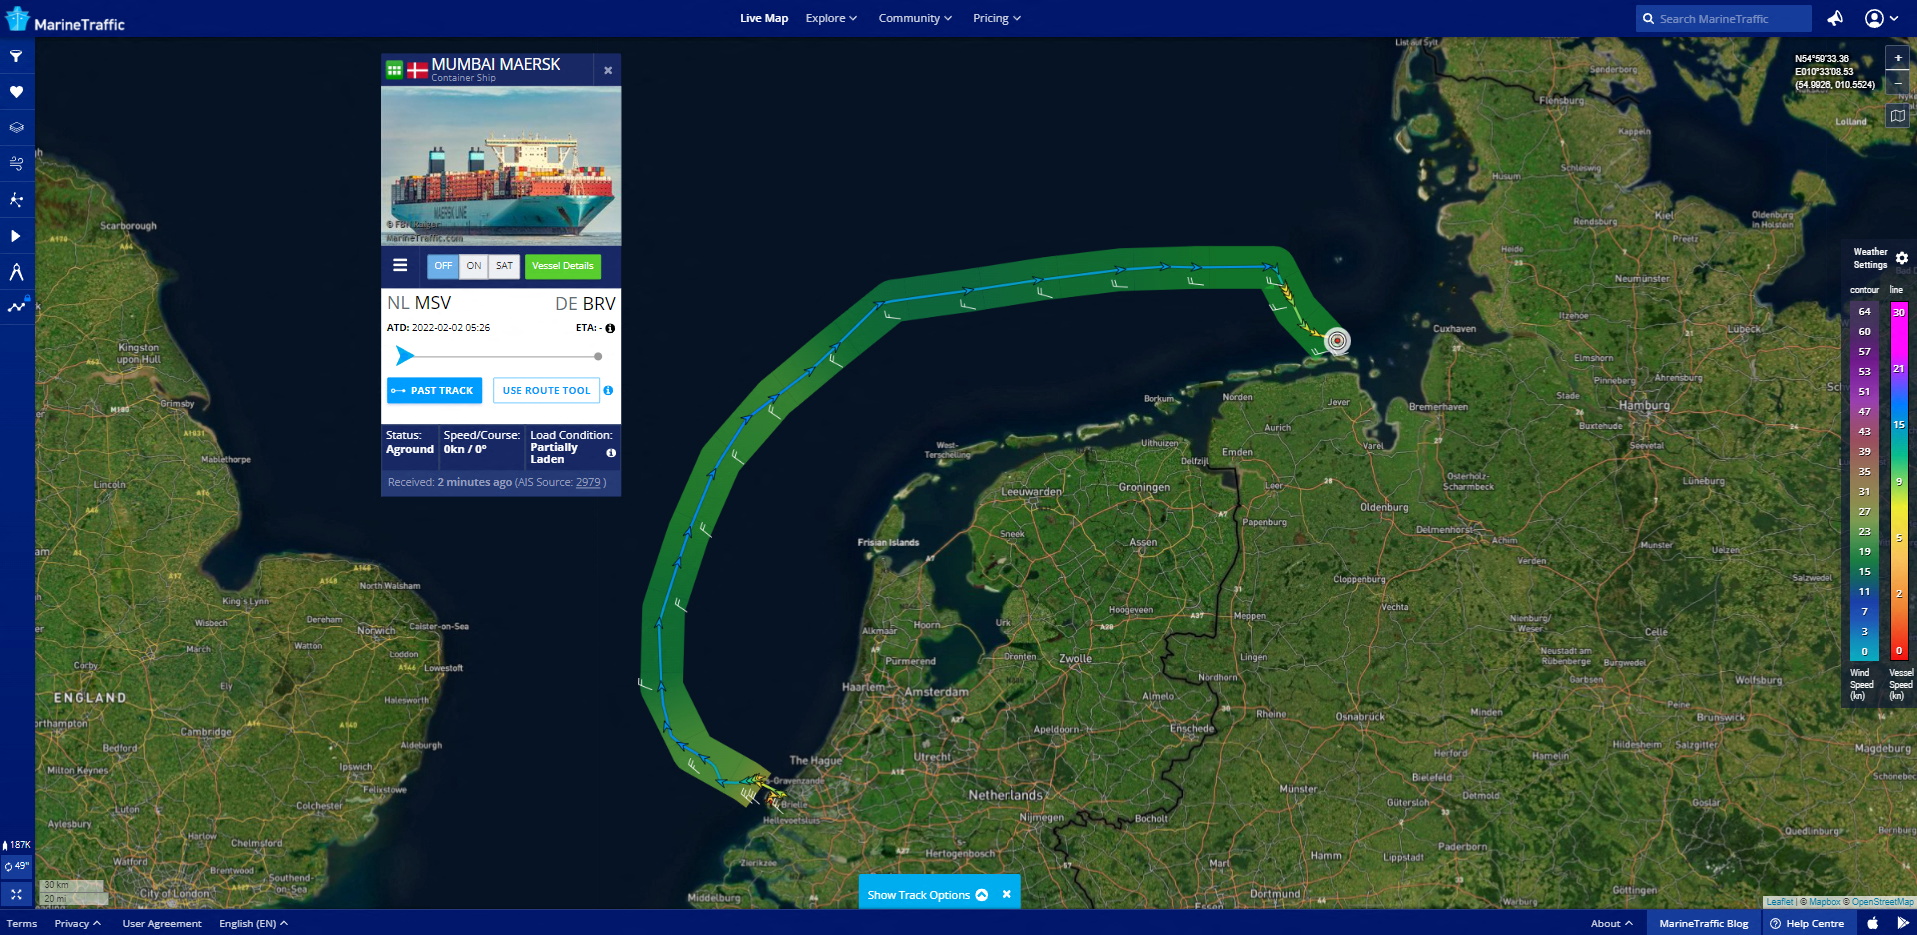 Container ship runs aground off German island